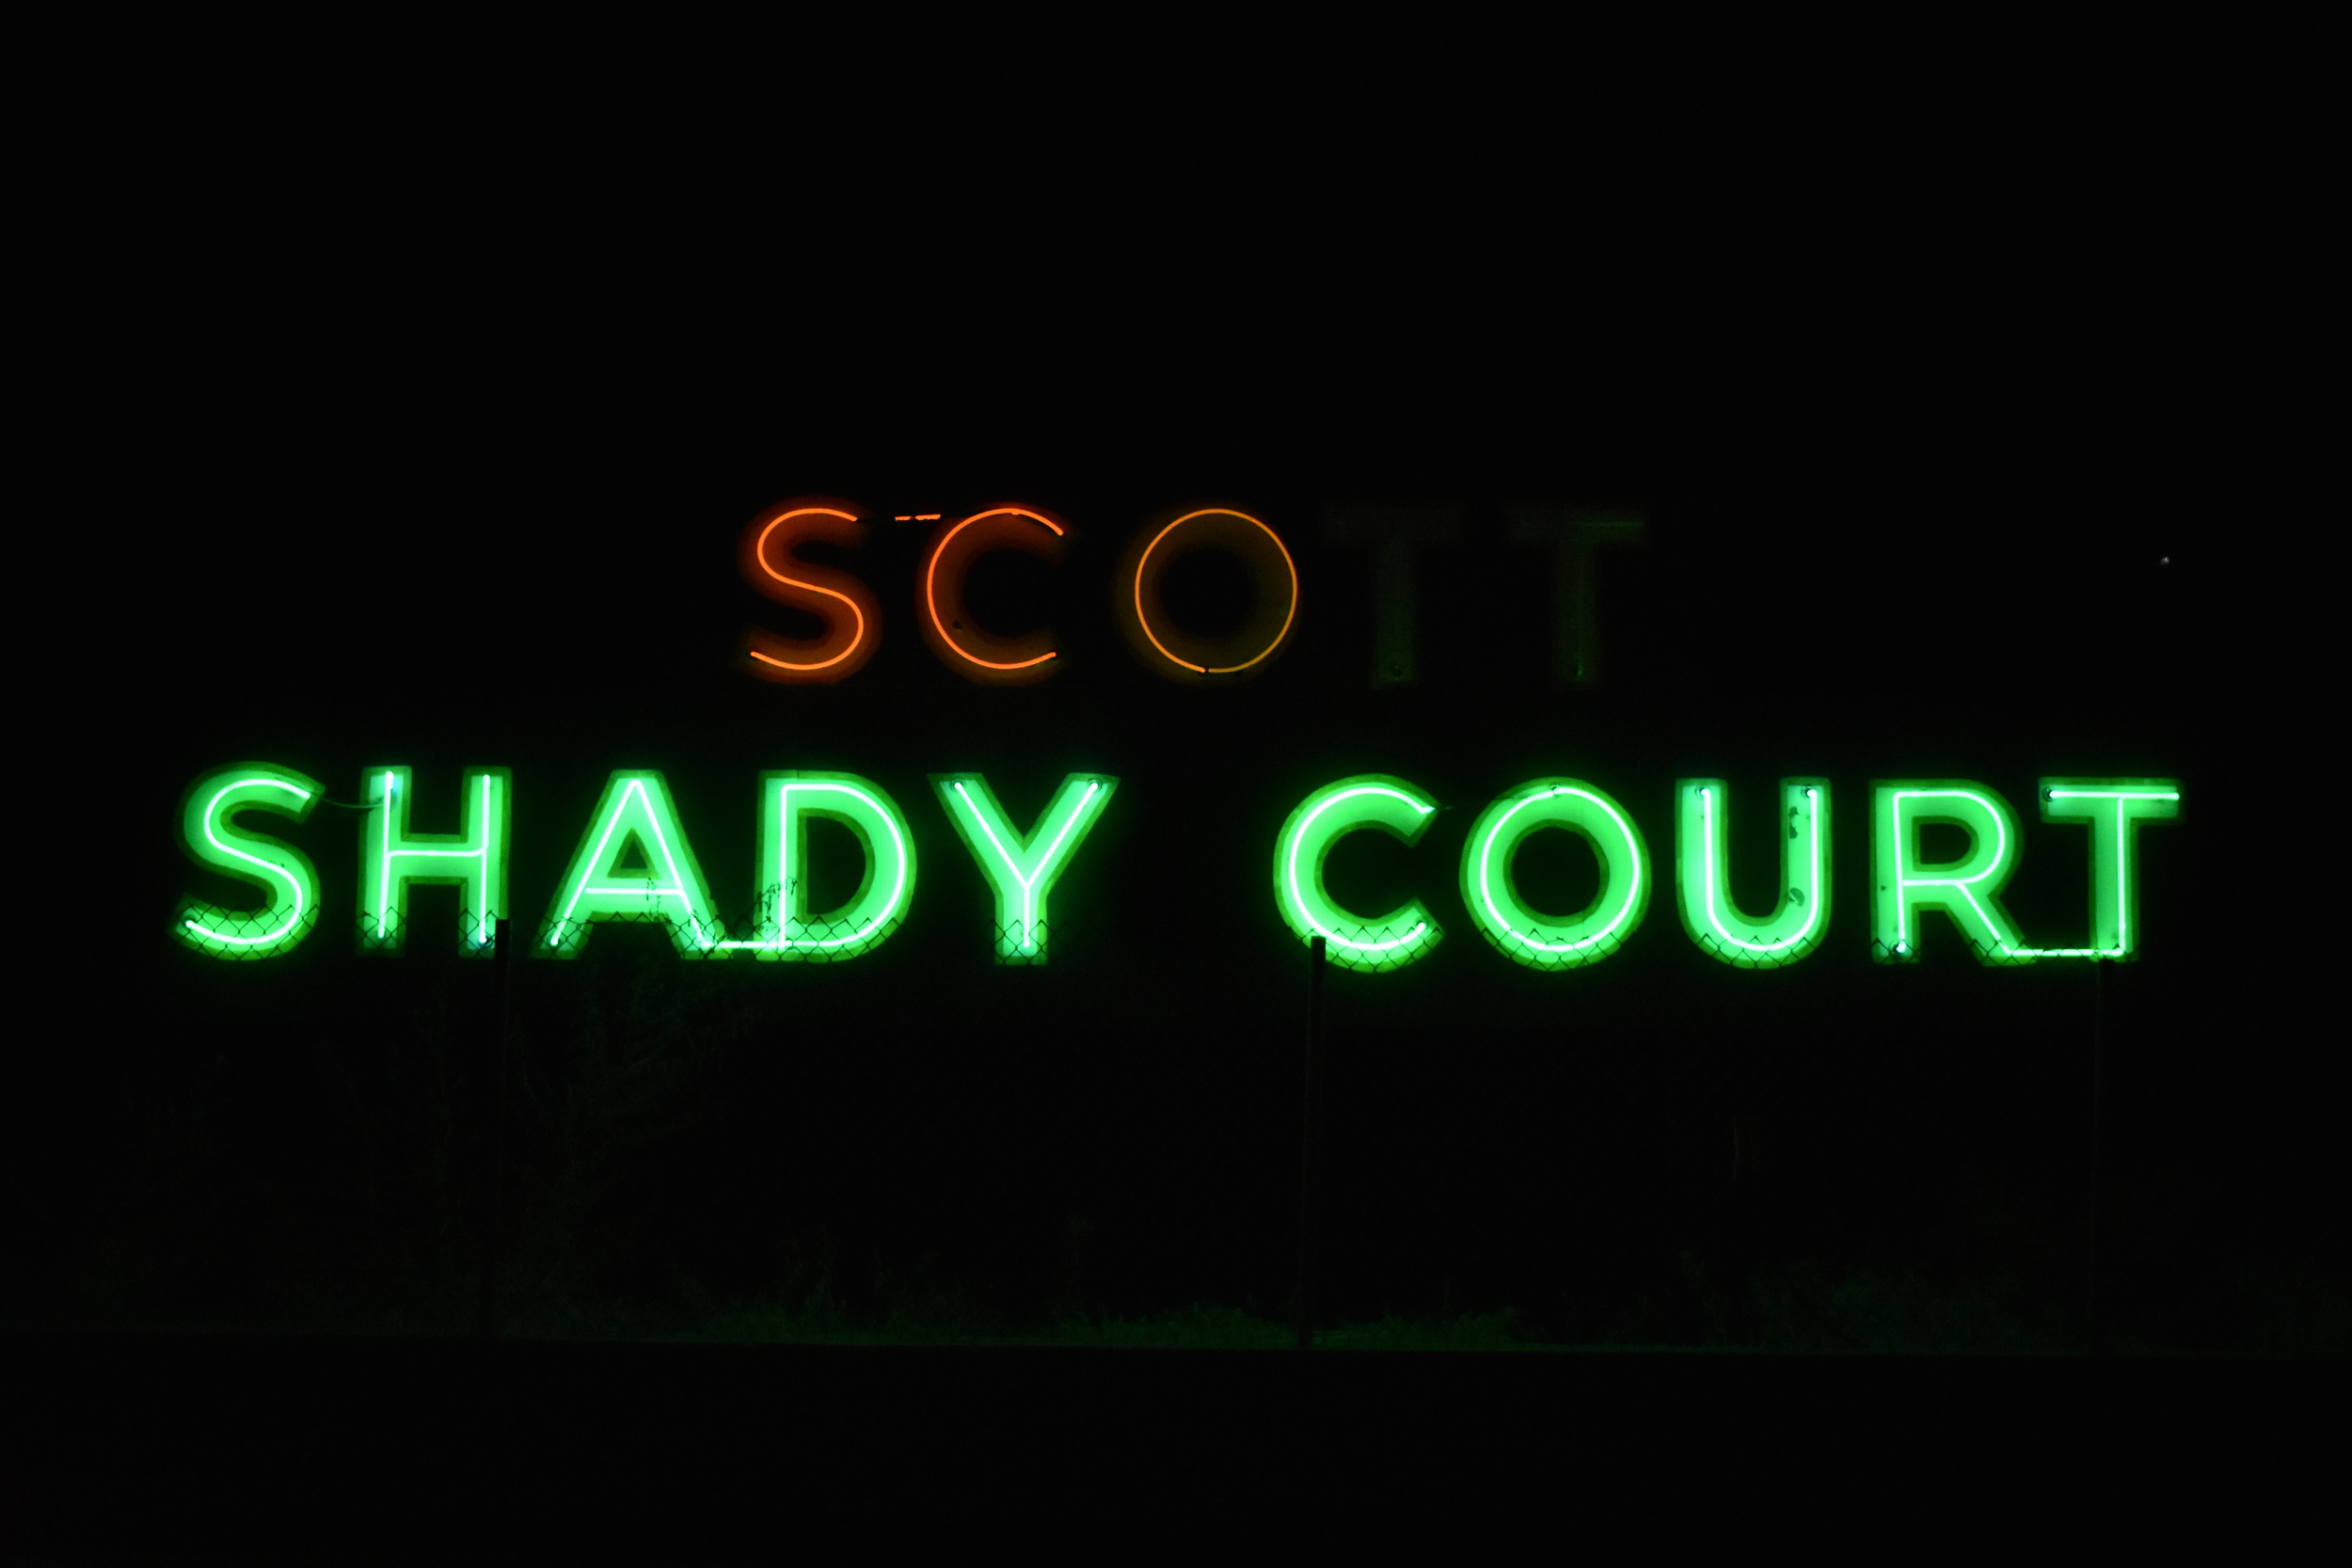 Scott Shady Court Motel mounted sign, Winnemucca, Nevada